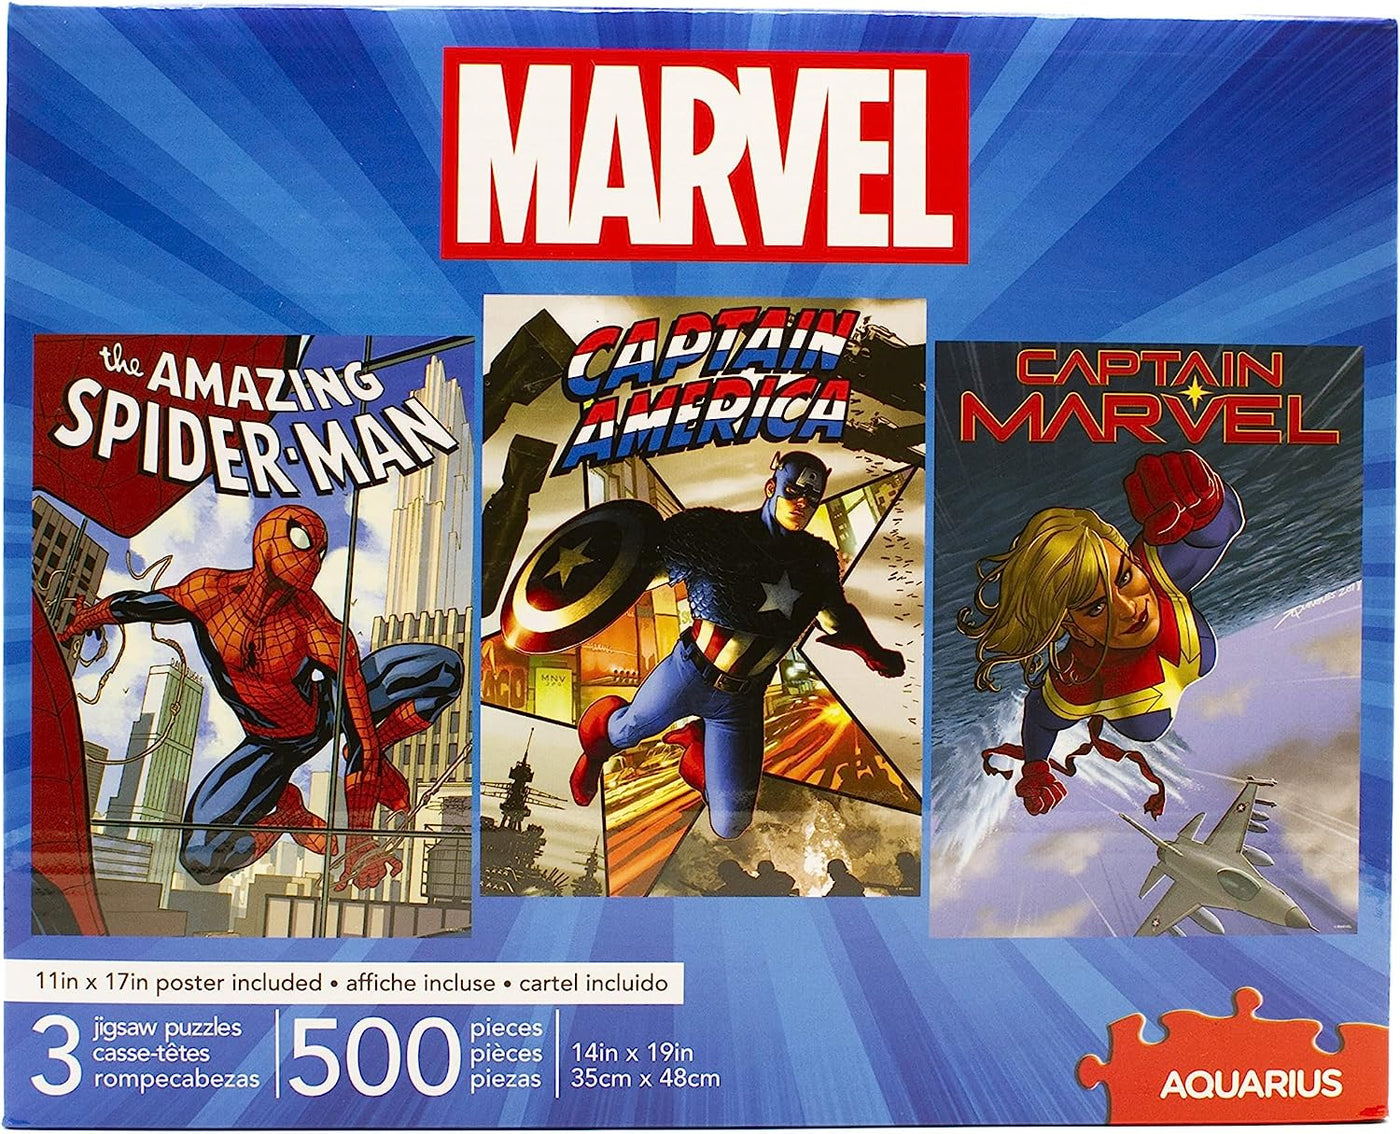 3 x 500pc Marvel Puzzle  The Amazing Spiderman, Captain America & Captain Marvel